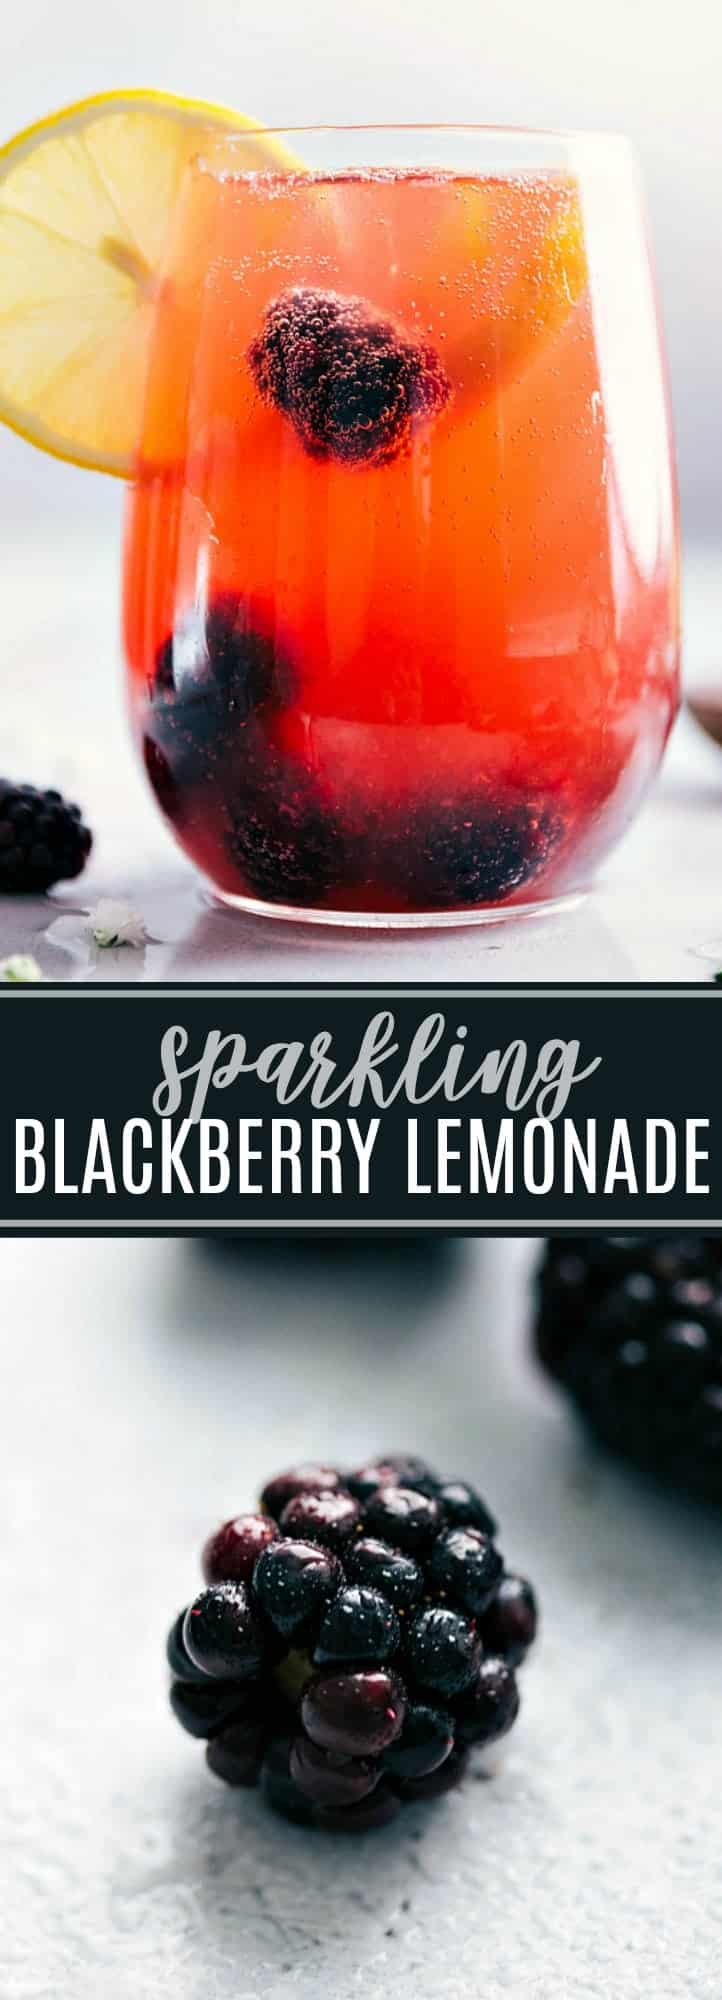 Refreshing, sweet, and easy-to-make sparkling blackberry lemonade via chelseasmessyapron.com #lemonade #blackberry #berry #homemade #fresh #easy #light #delicious #sparkling #kidfriendly #sweet #tart #lemon #lemons #drink #beverage #party #potluck #summer